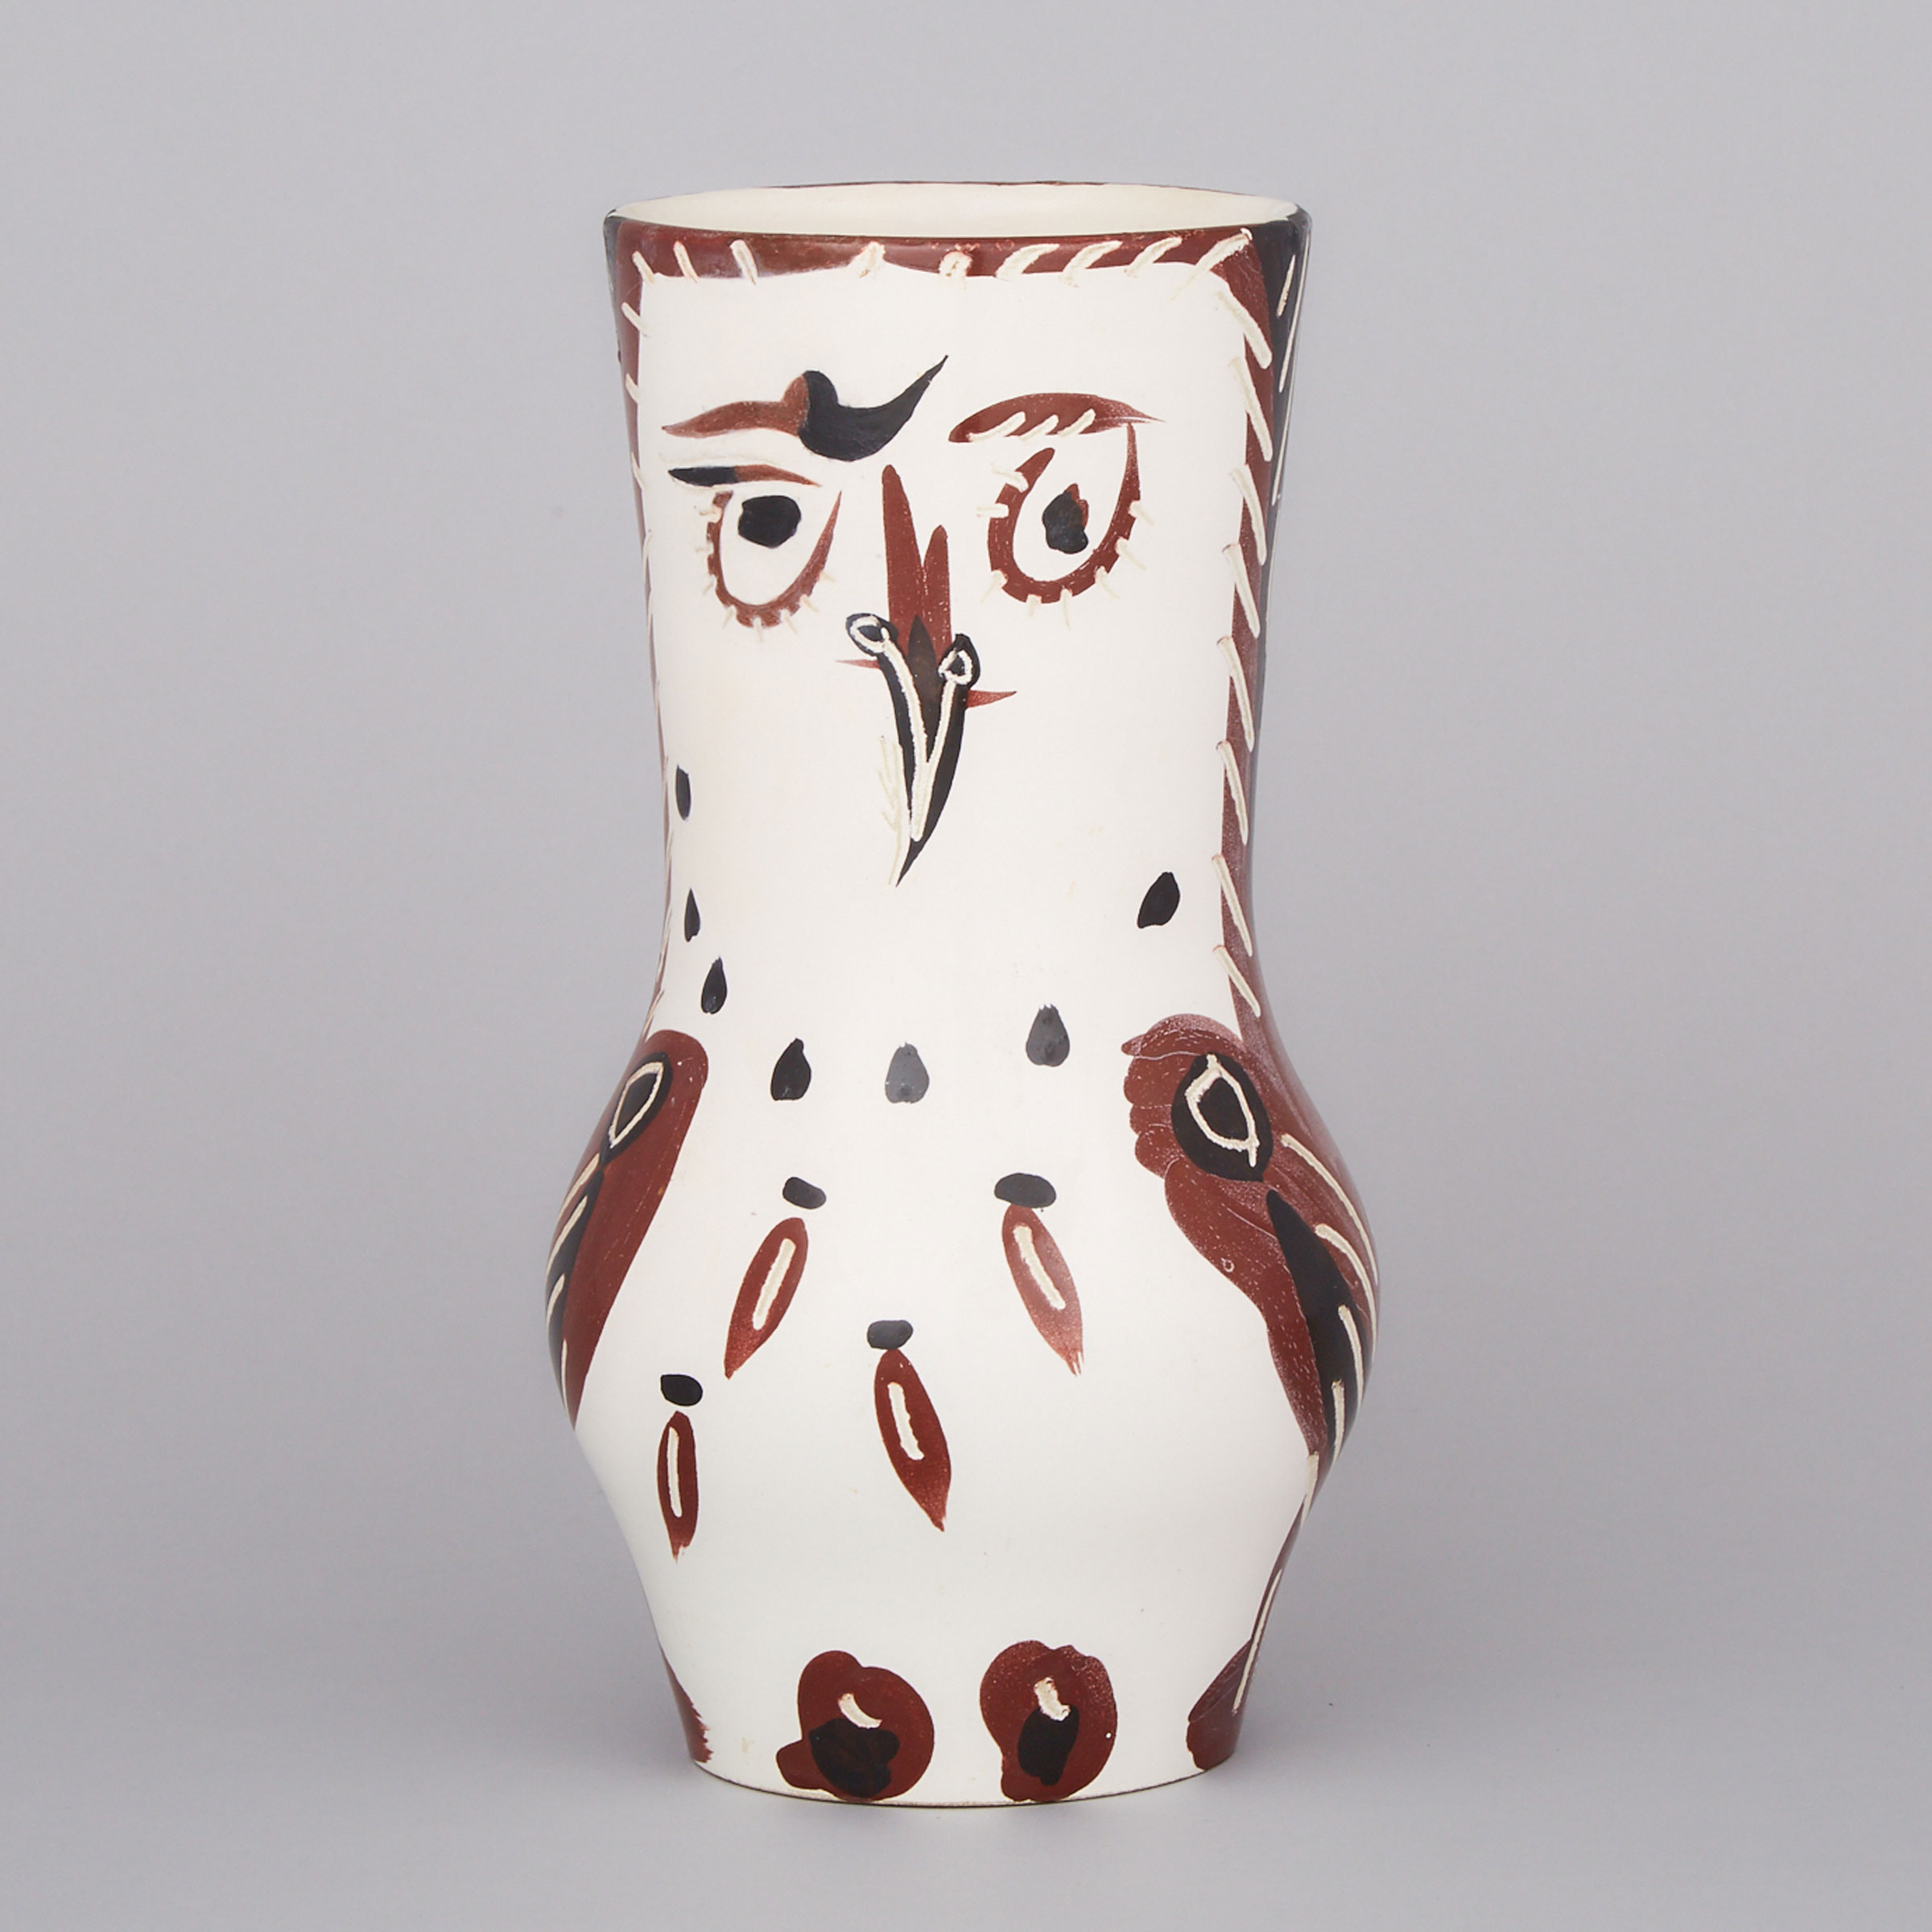 ‘Chouette Marron/Noir’, Pablo Picasso (1881-1973), Ceramic Vase, 58/100, c.1952